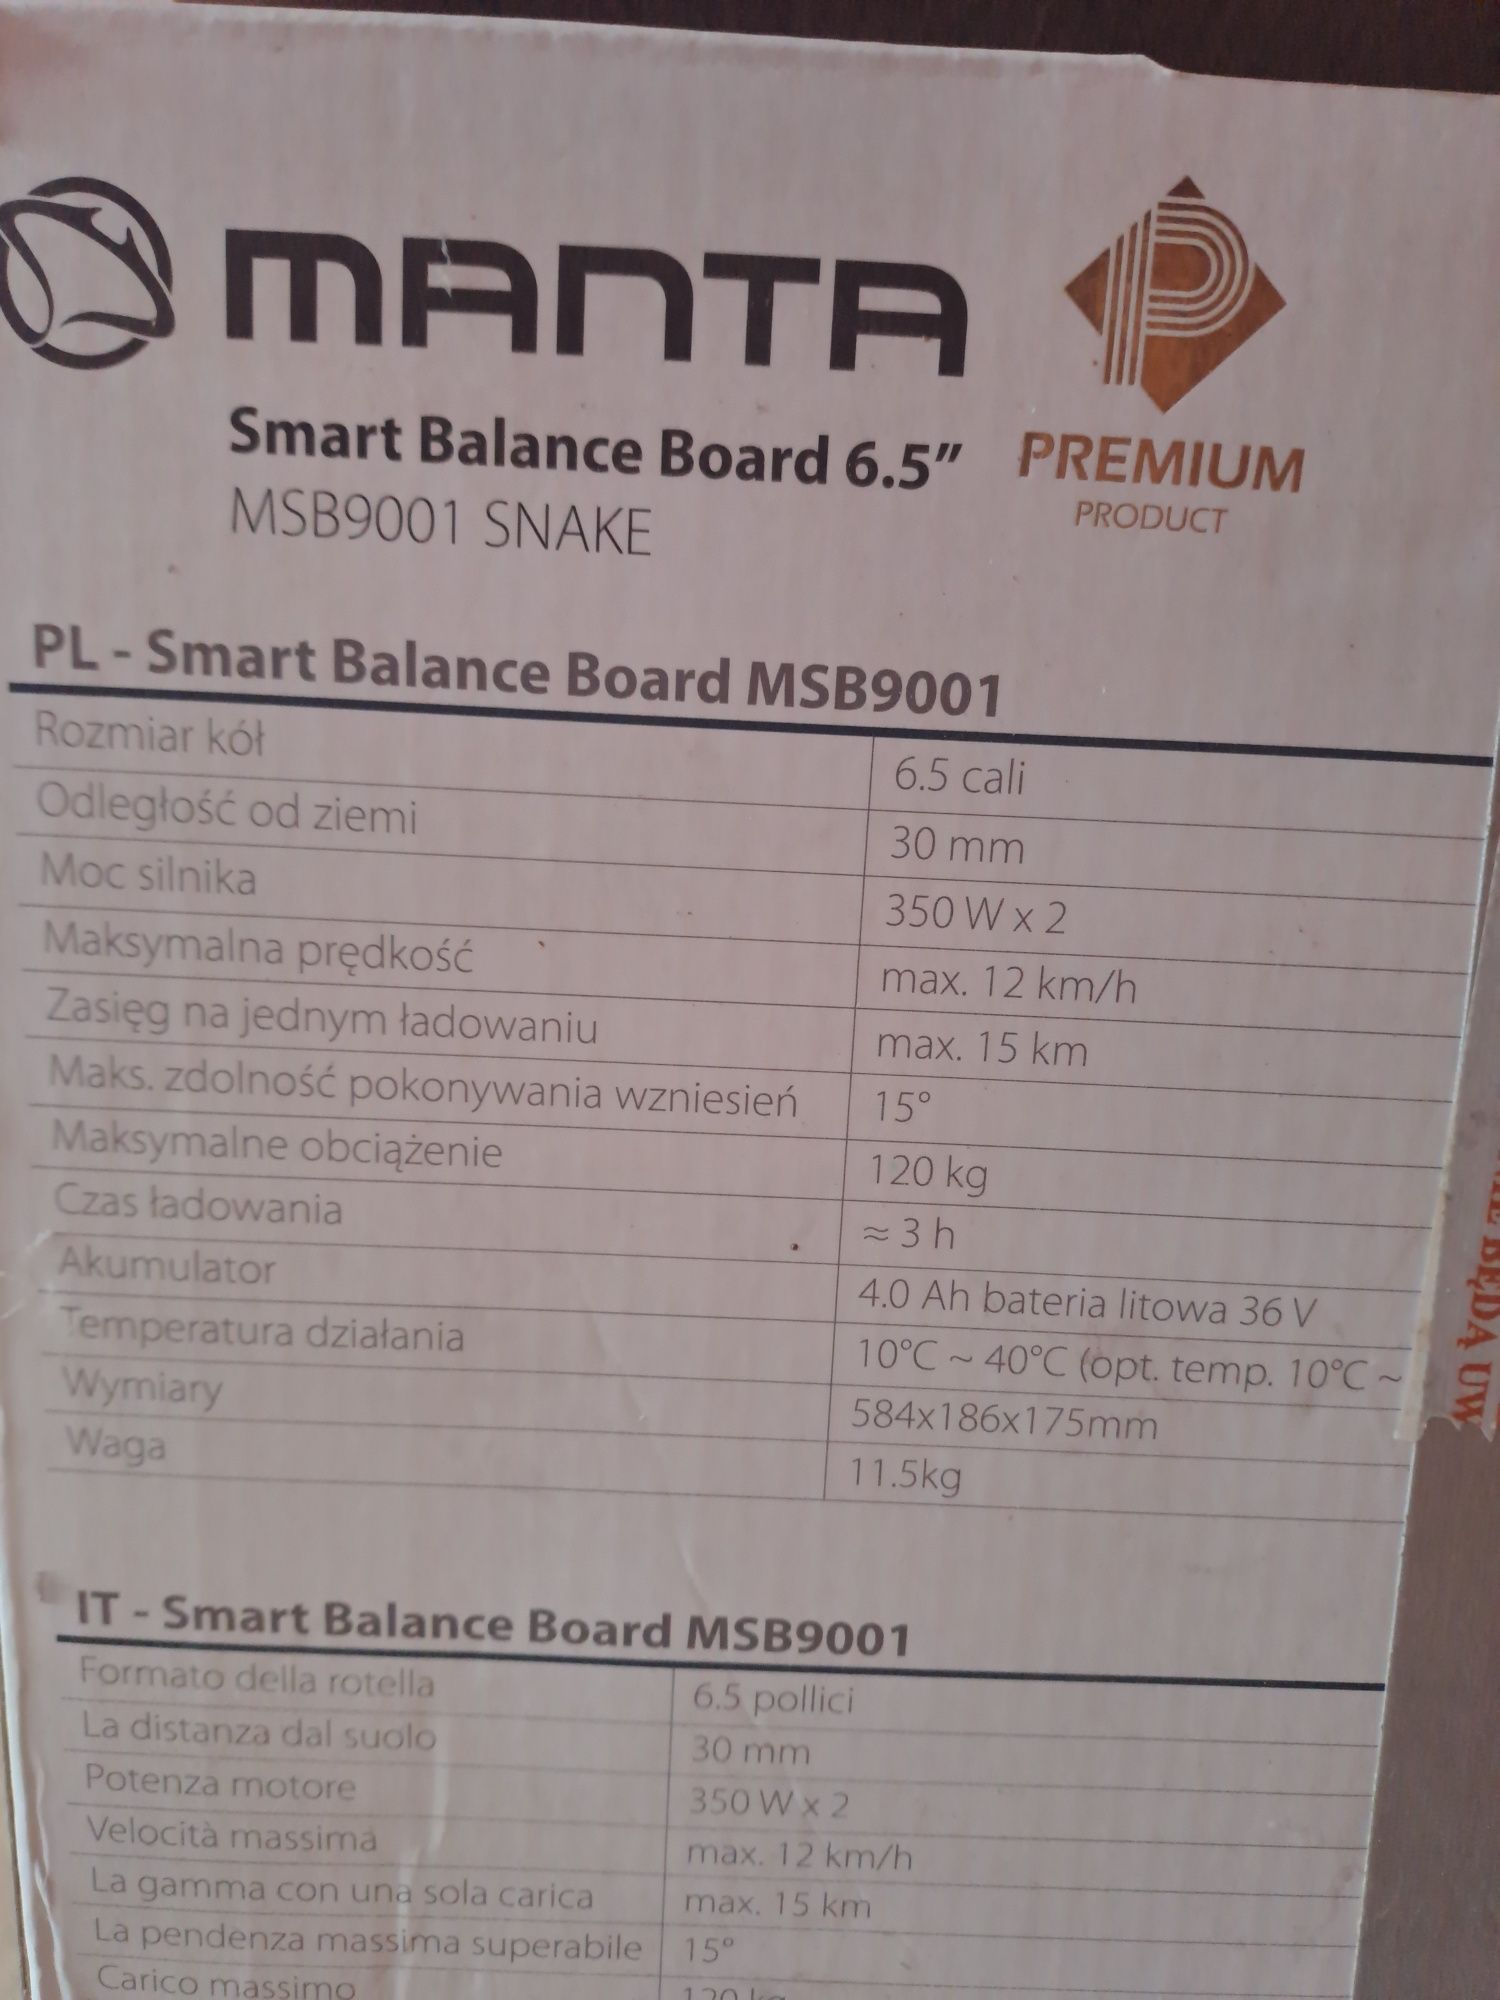 Deska elektryczna "howerboard" manta MSB9001 SNAKE